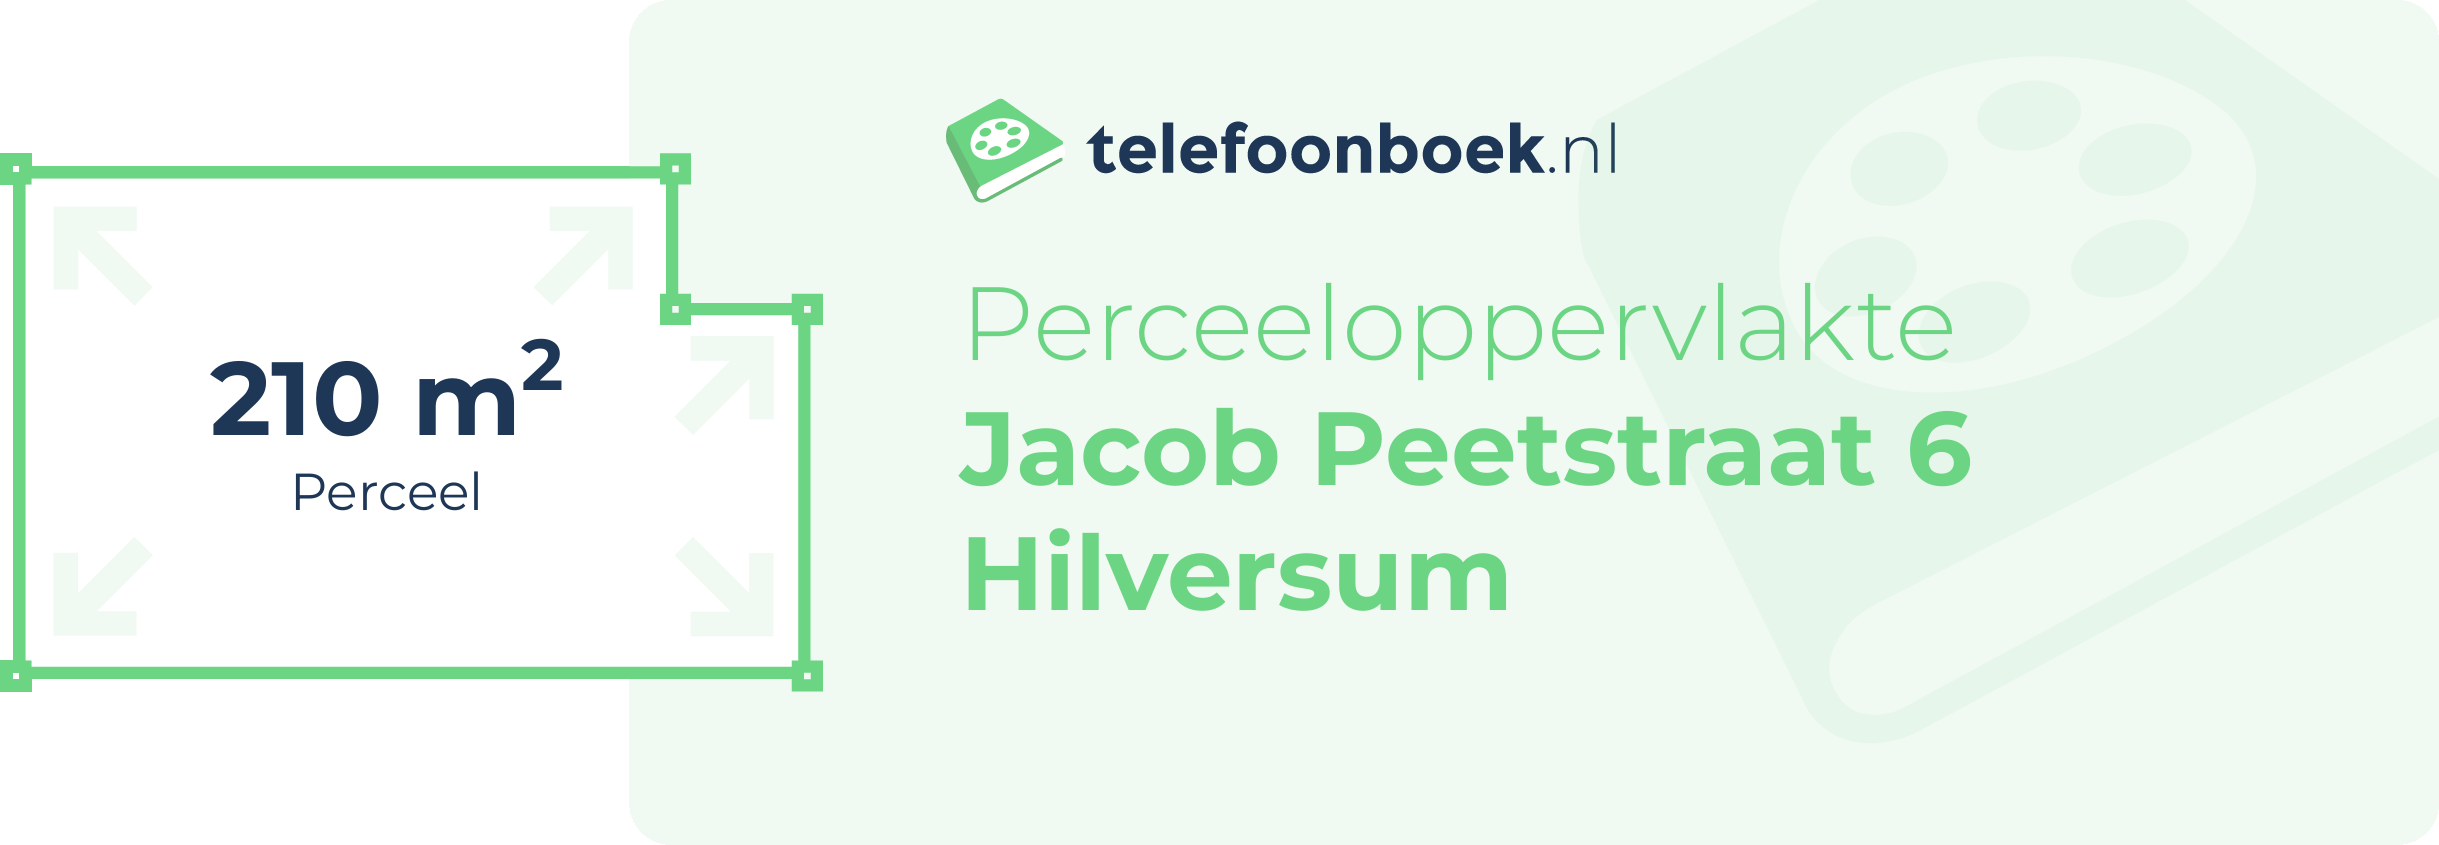 Perceeloppervlakte Jacob Peetstraat 6 Hilversum